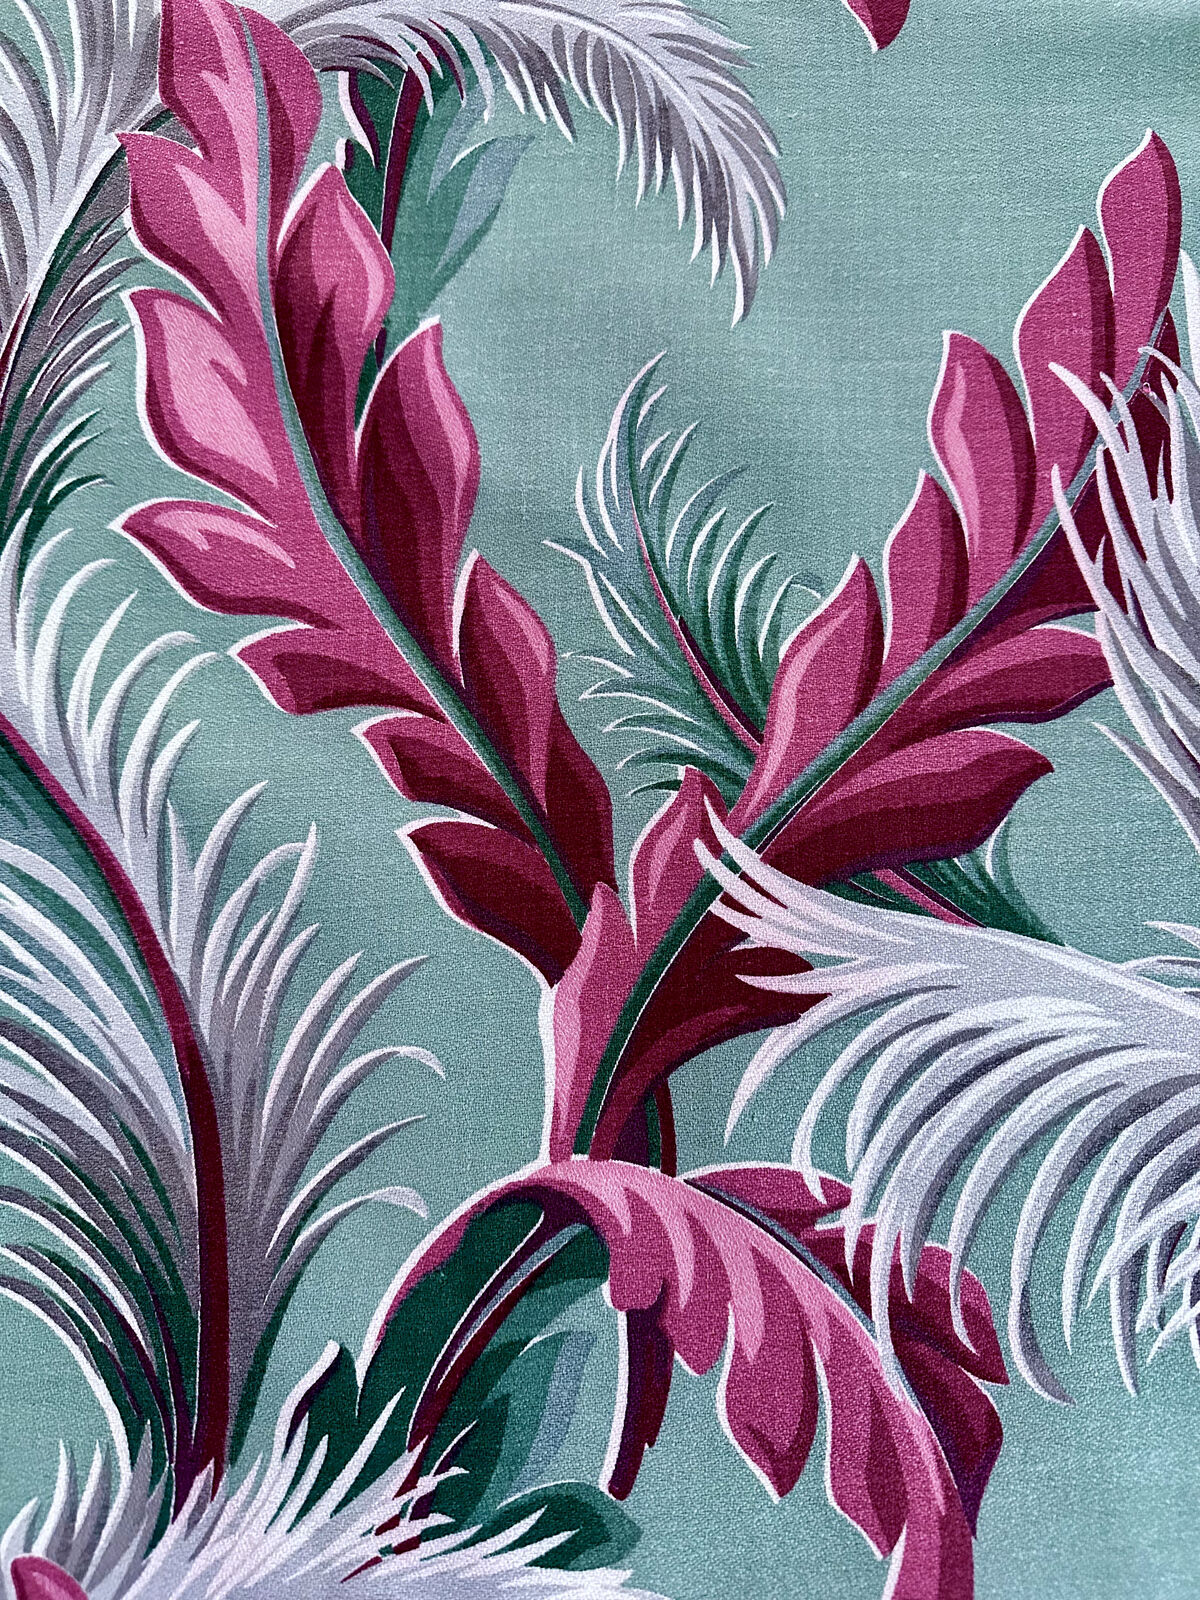 30's Art Deco Hawaiiana in Miami Beach Seafood Purples Barkcloth Vintage Fabric